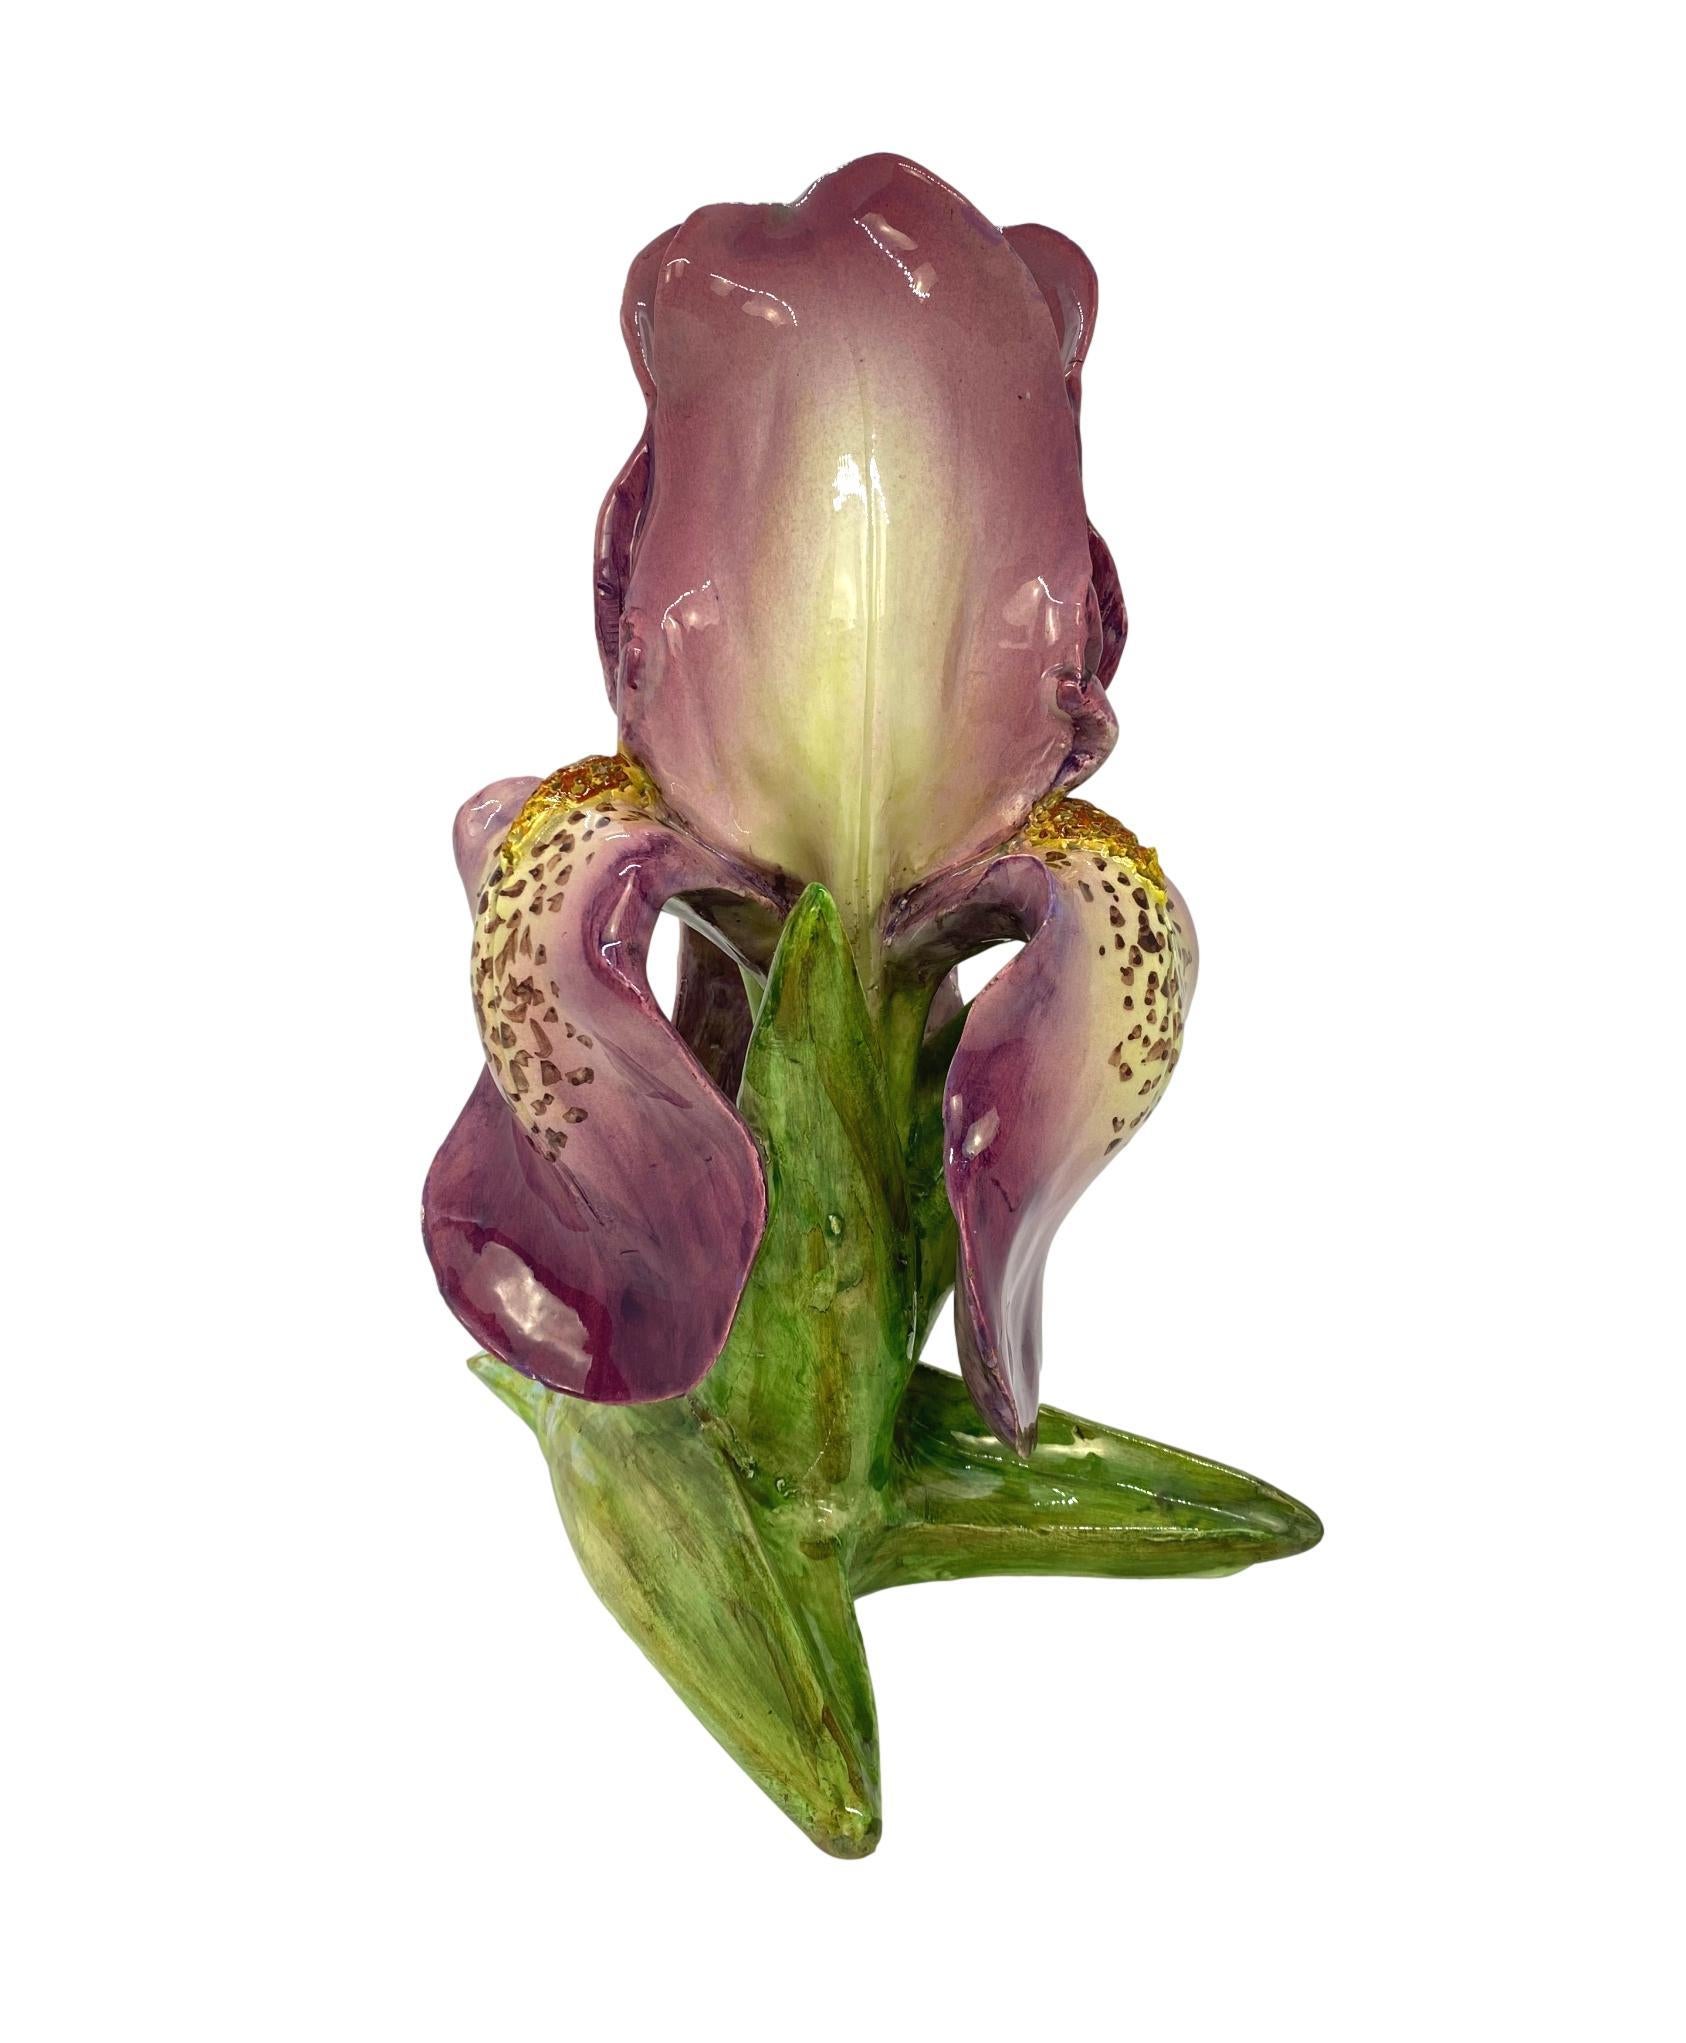 Molded Majolica Iris Vase by Delphin Massier, Lavender Glazed, French, circa 1870